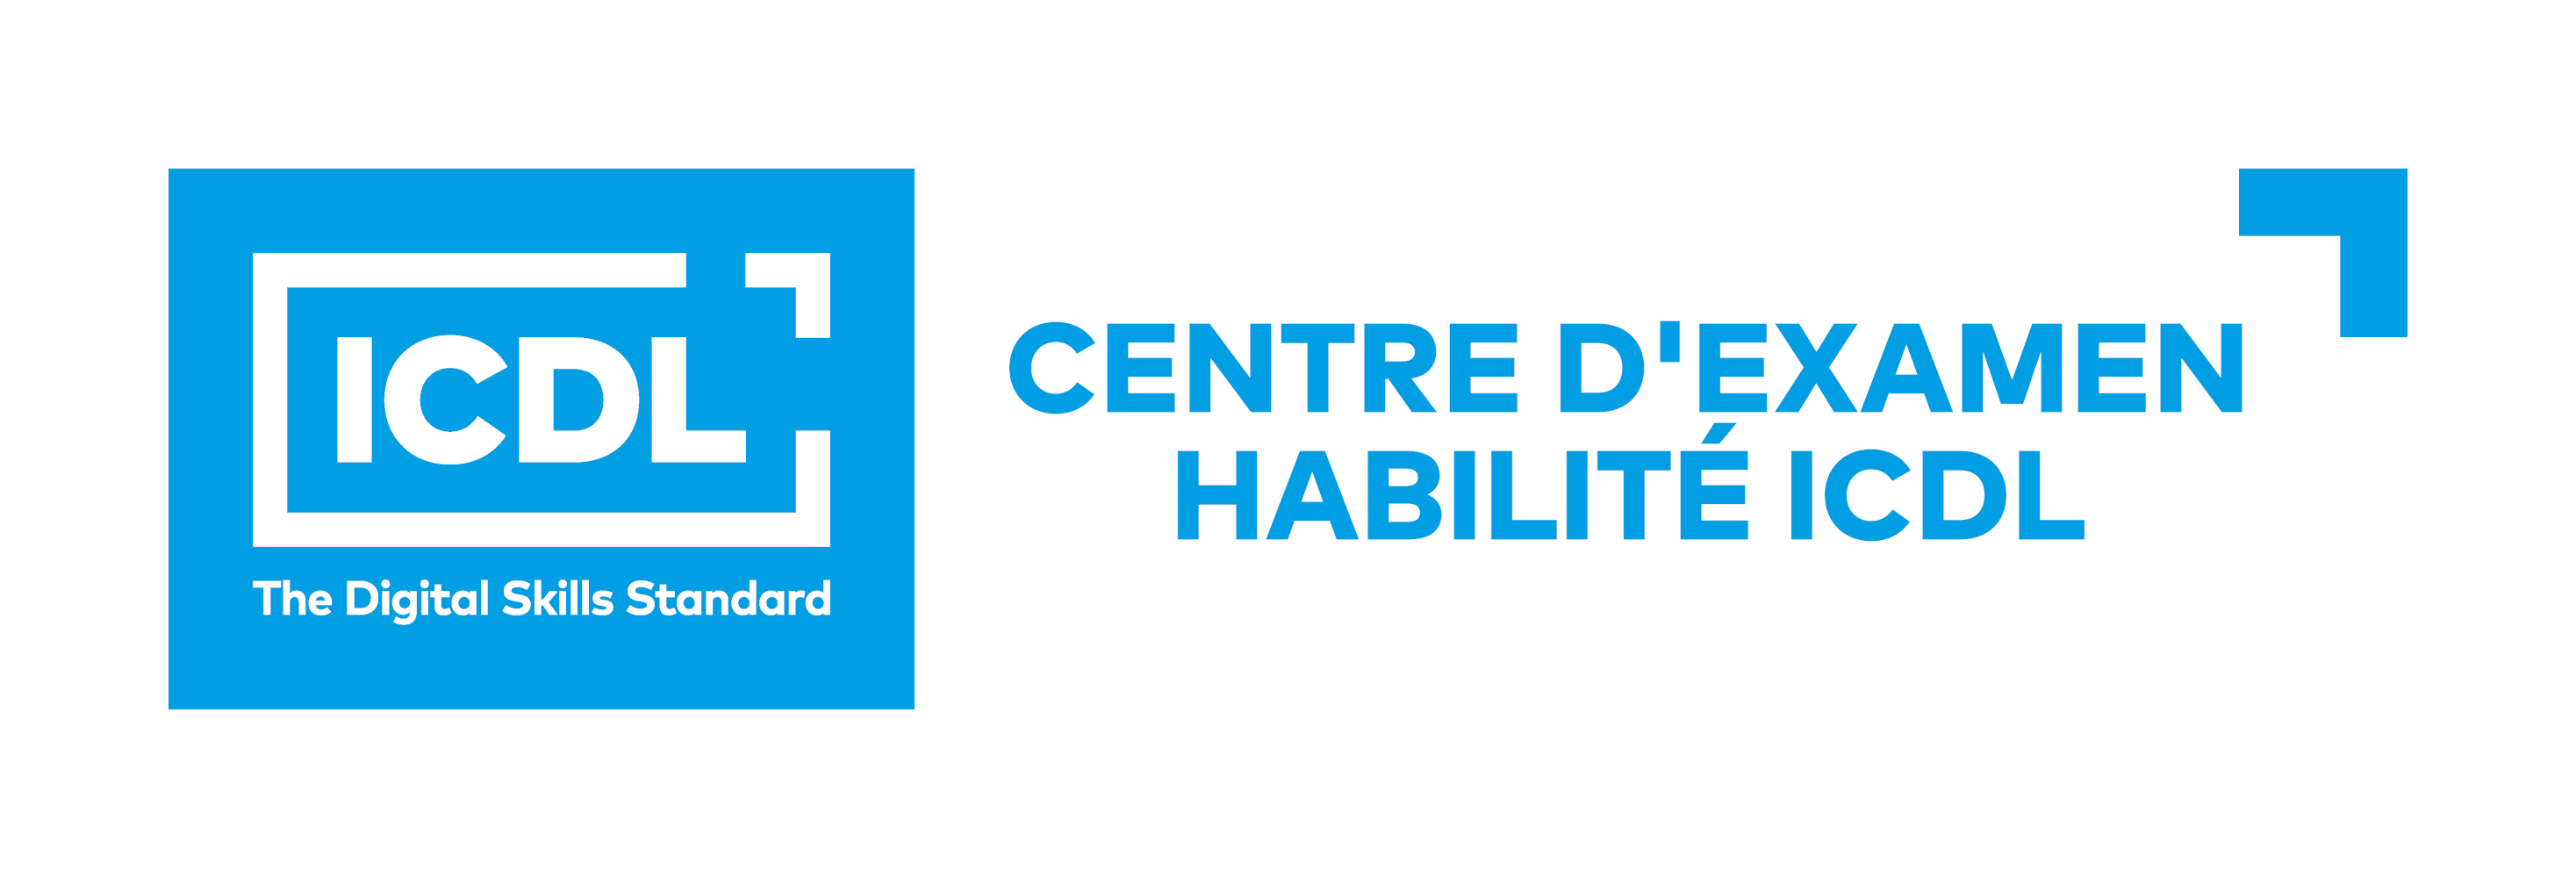 formatique Logo Centre Examen Habilite ICDL (PCIE)